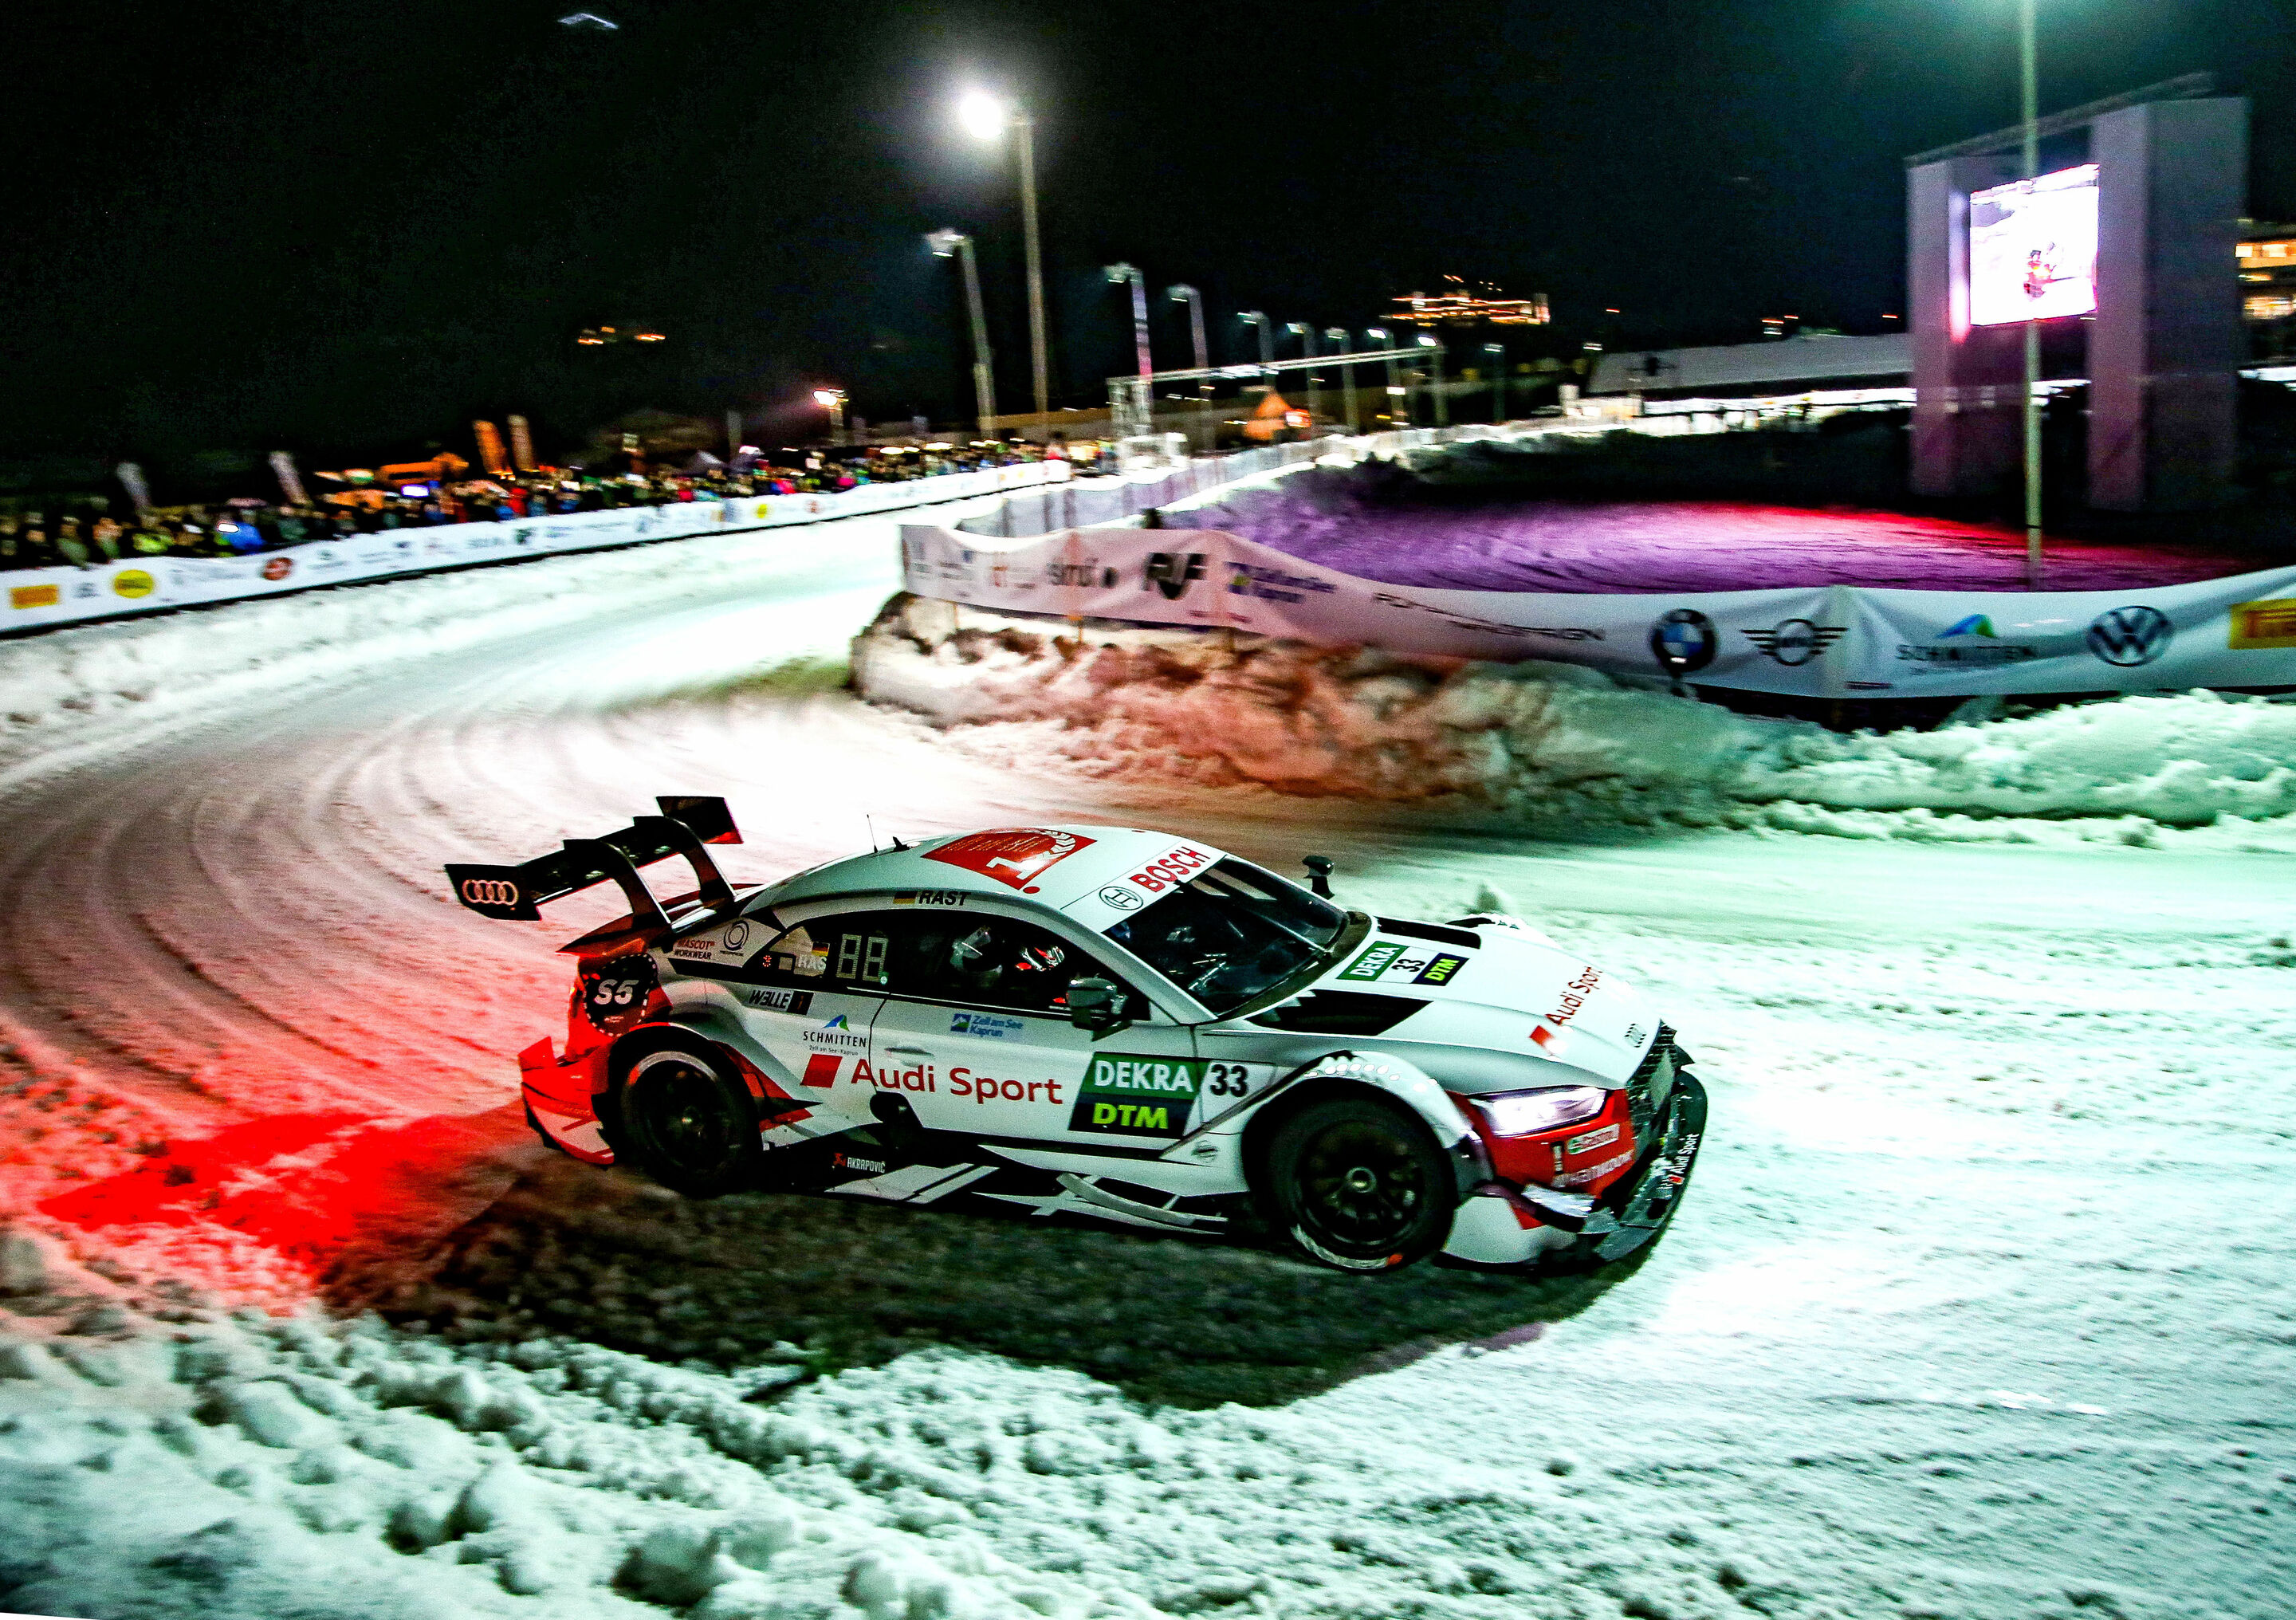 GP Ice Race 2020